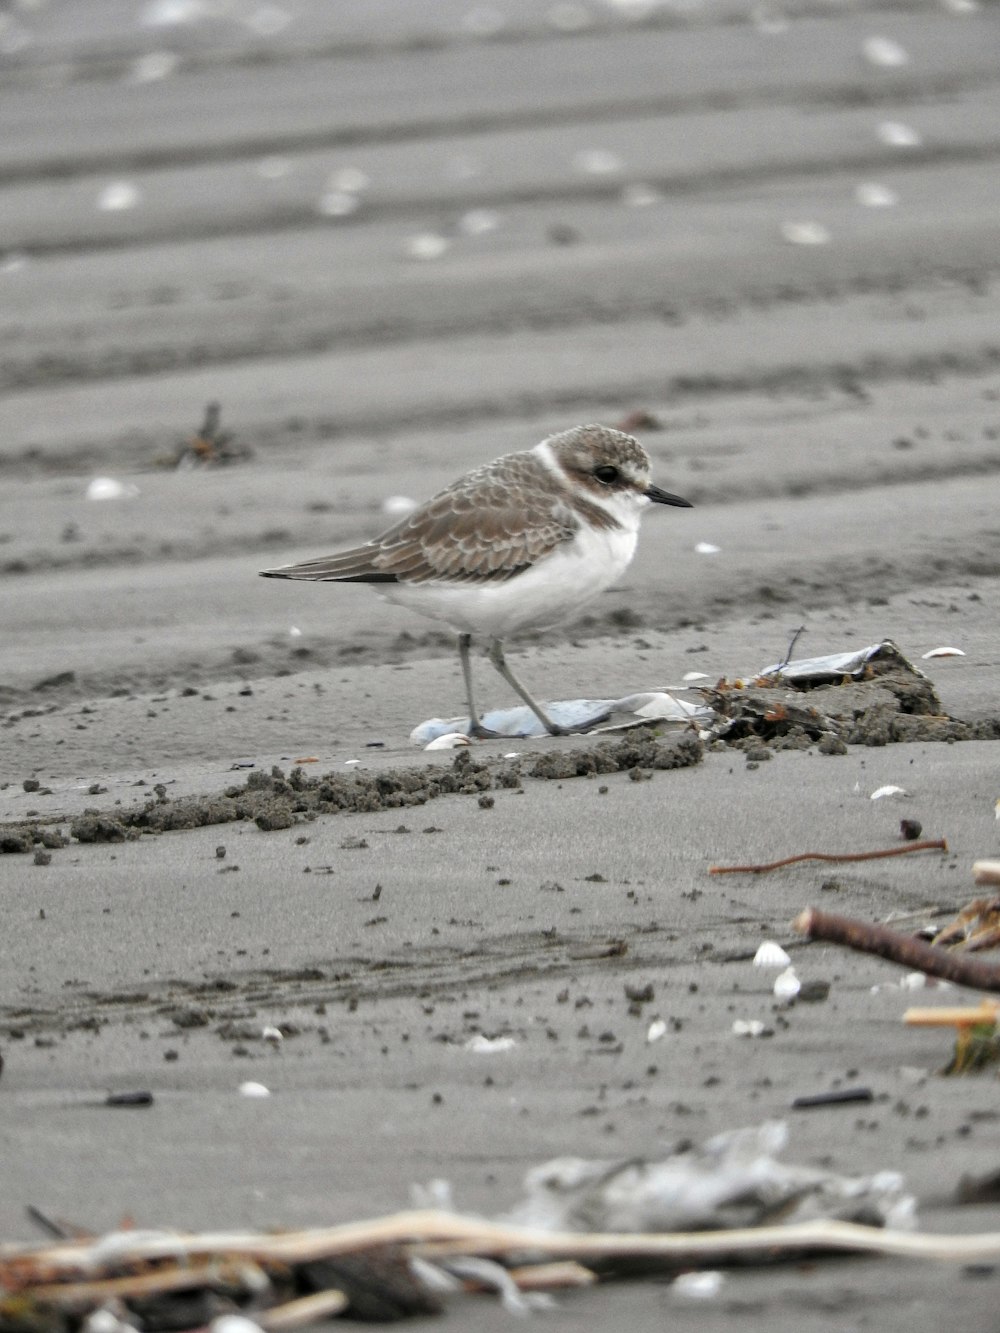 a small bird standing on a beach next to debris